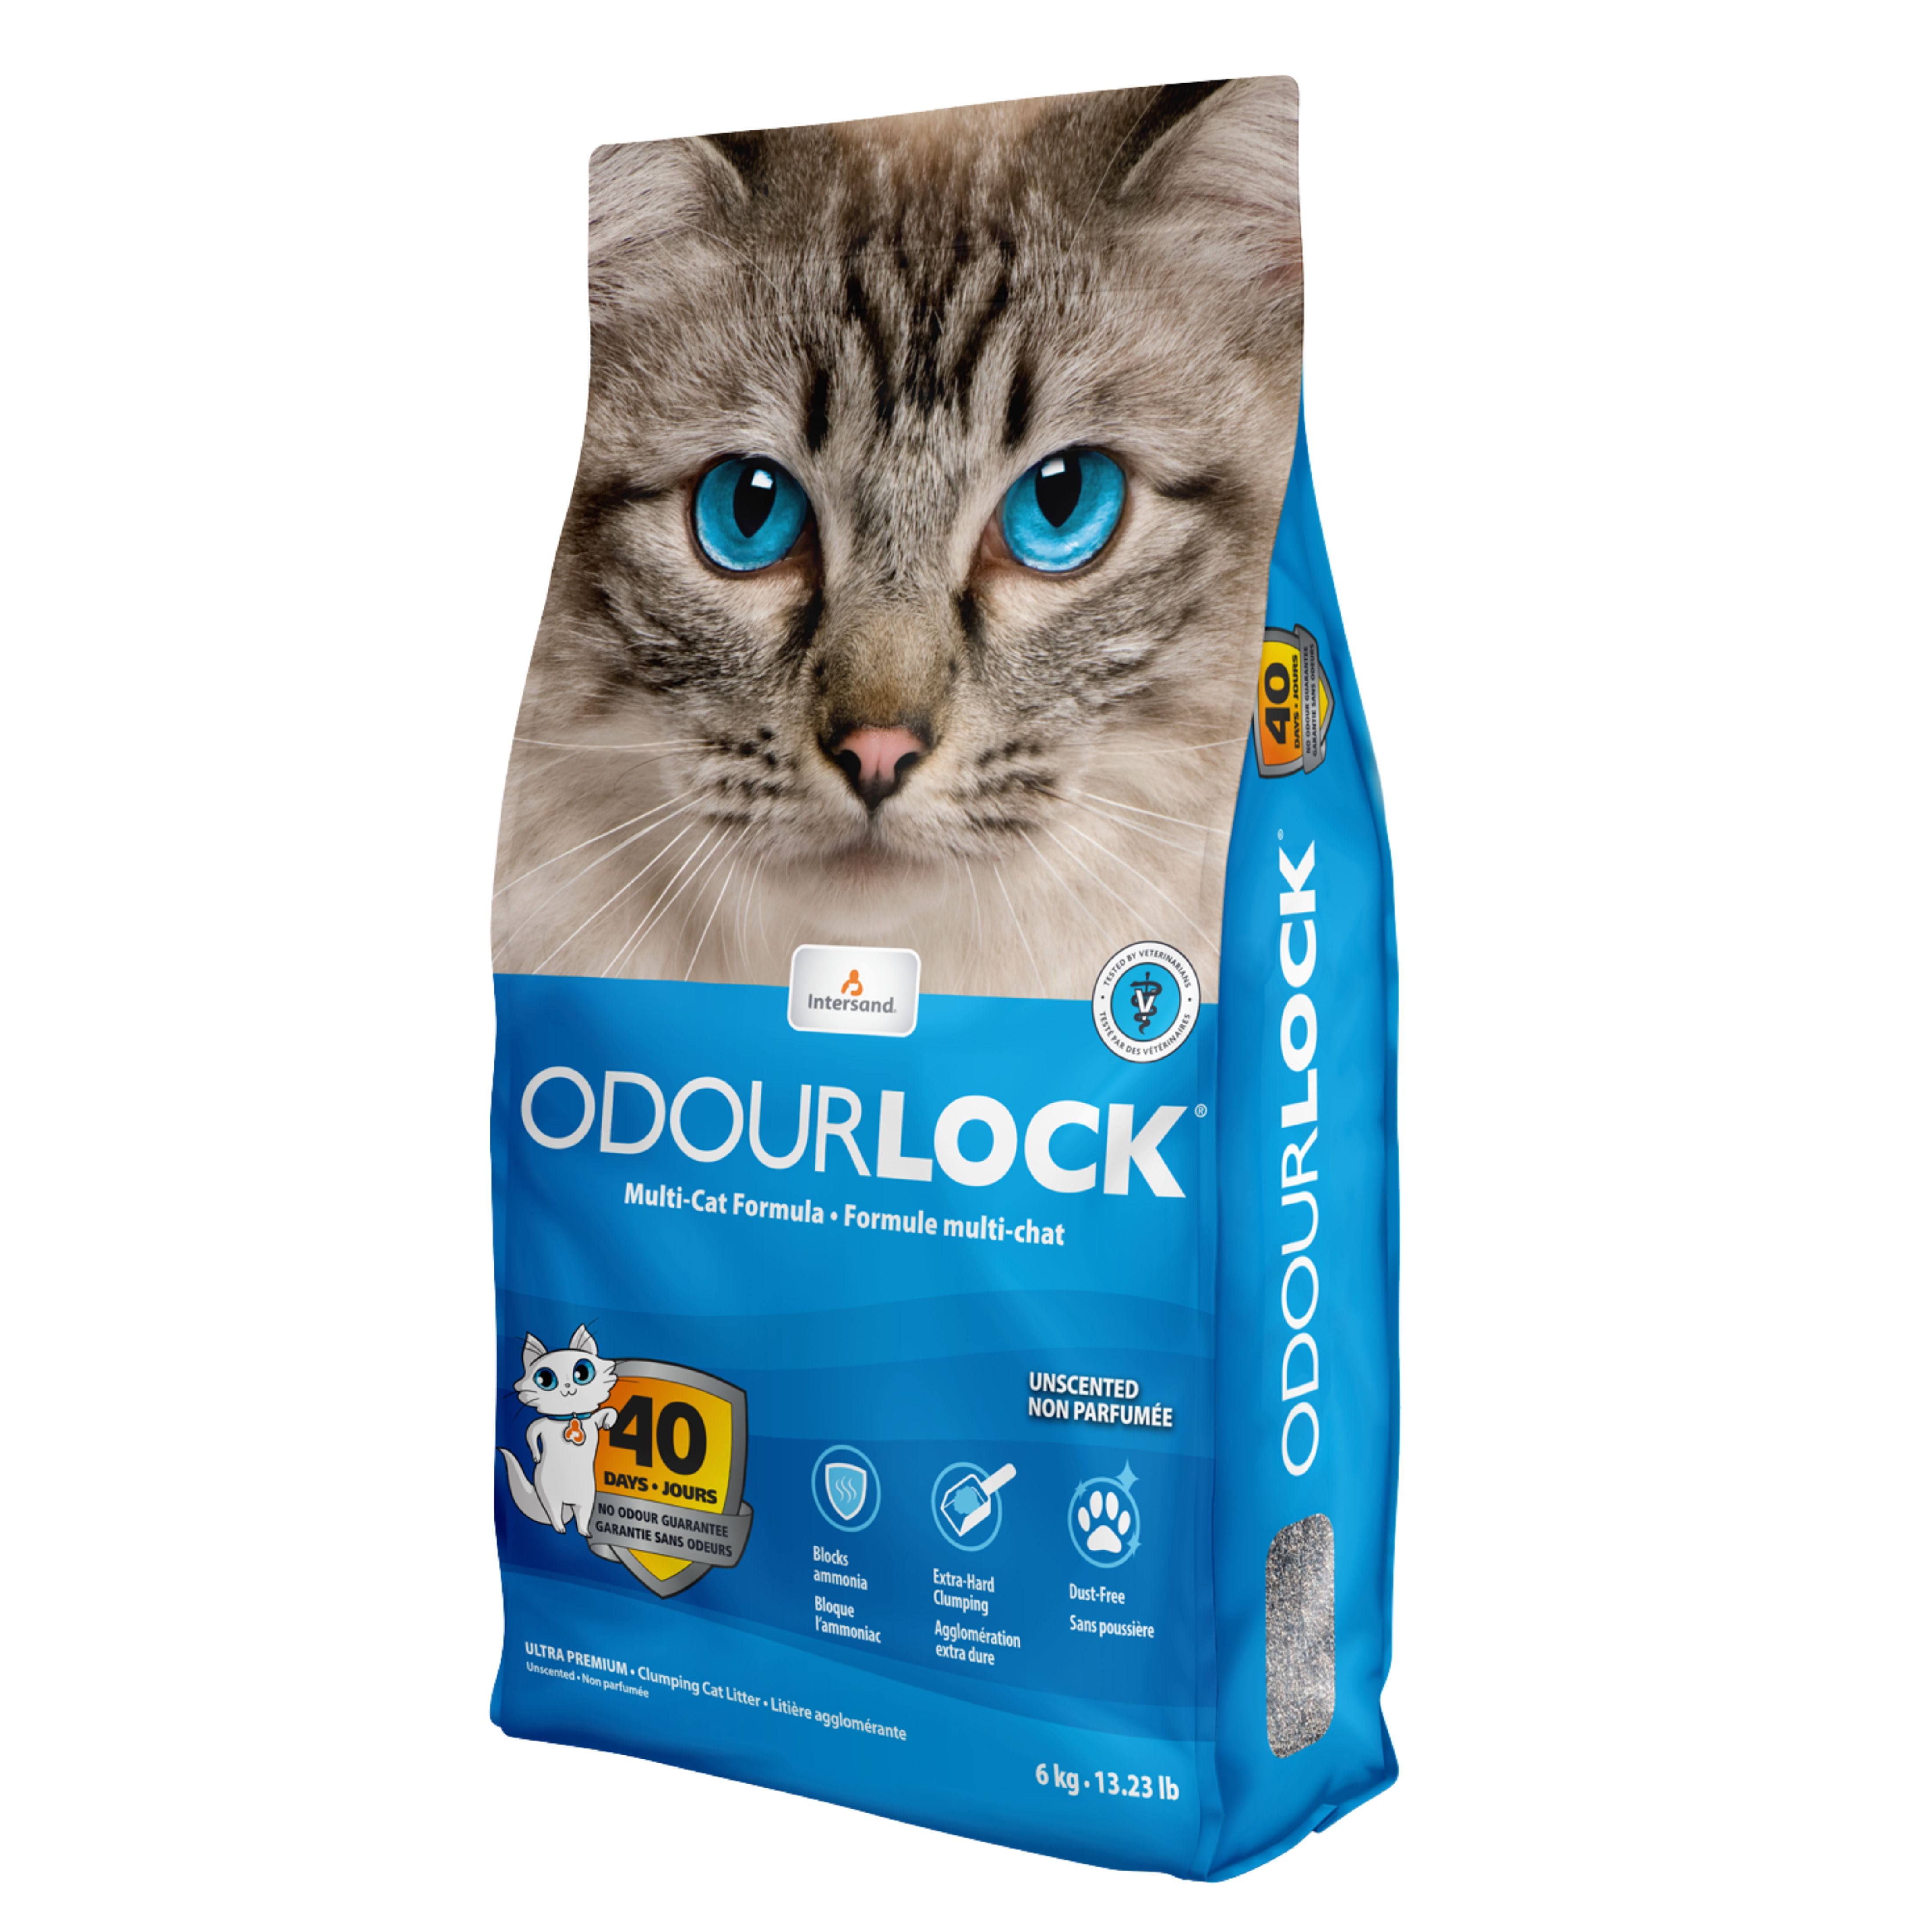 Intersand Odourlock Mineral Cat Litter 6-Kg